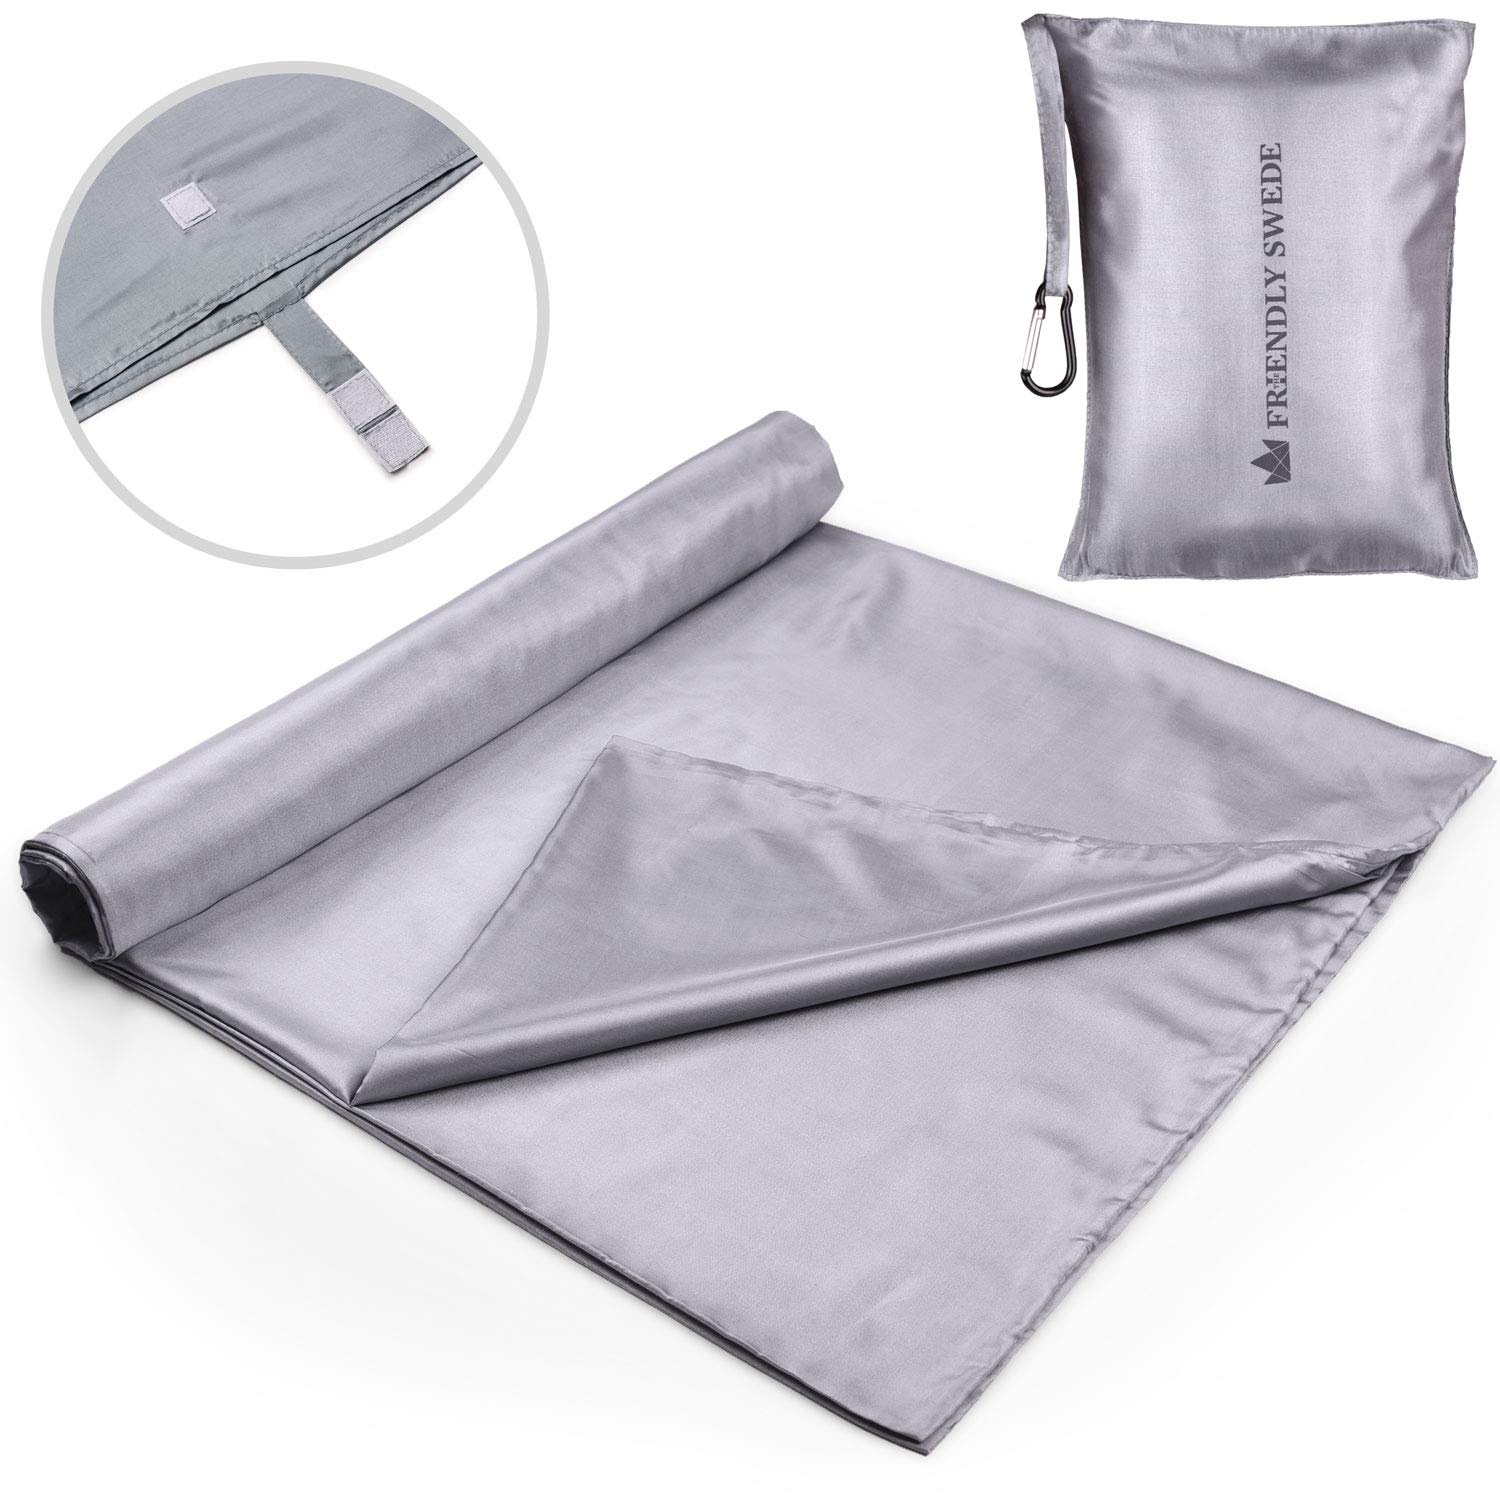 Microfiber Sleeping Bag Liner Travel Bed Sack Sleep Bag Liners for Adults,f V4T6 